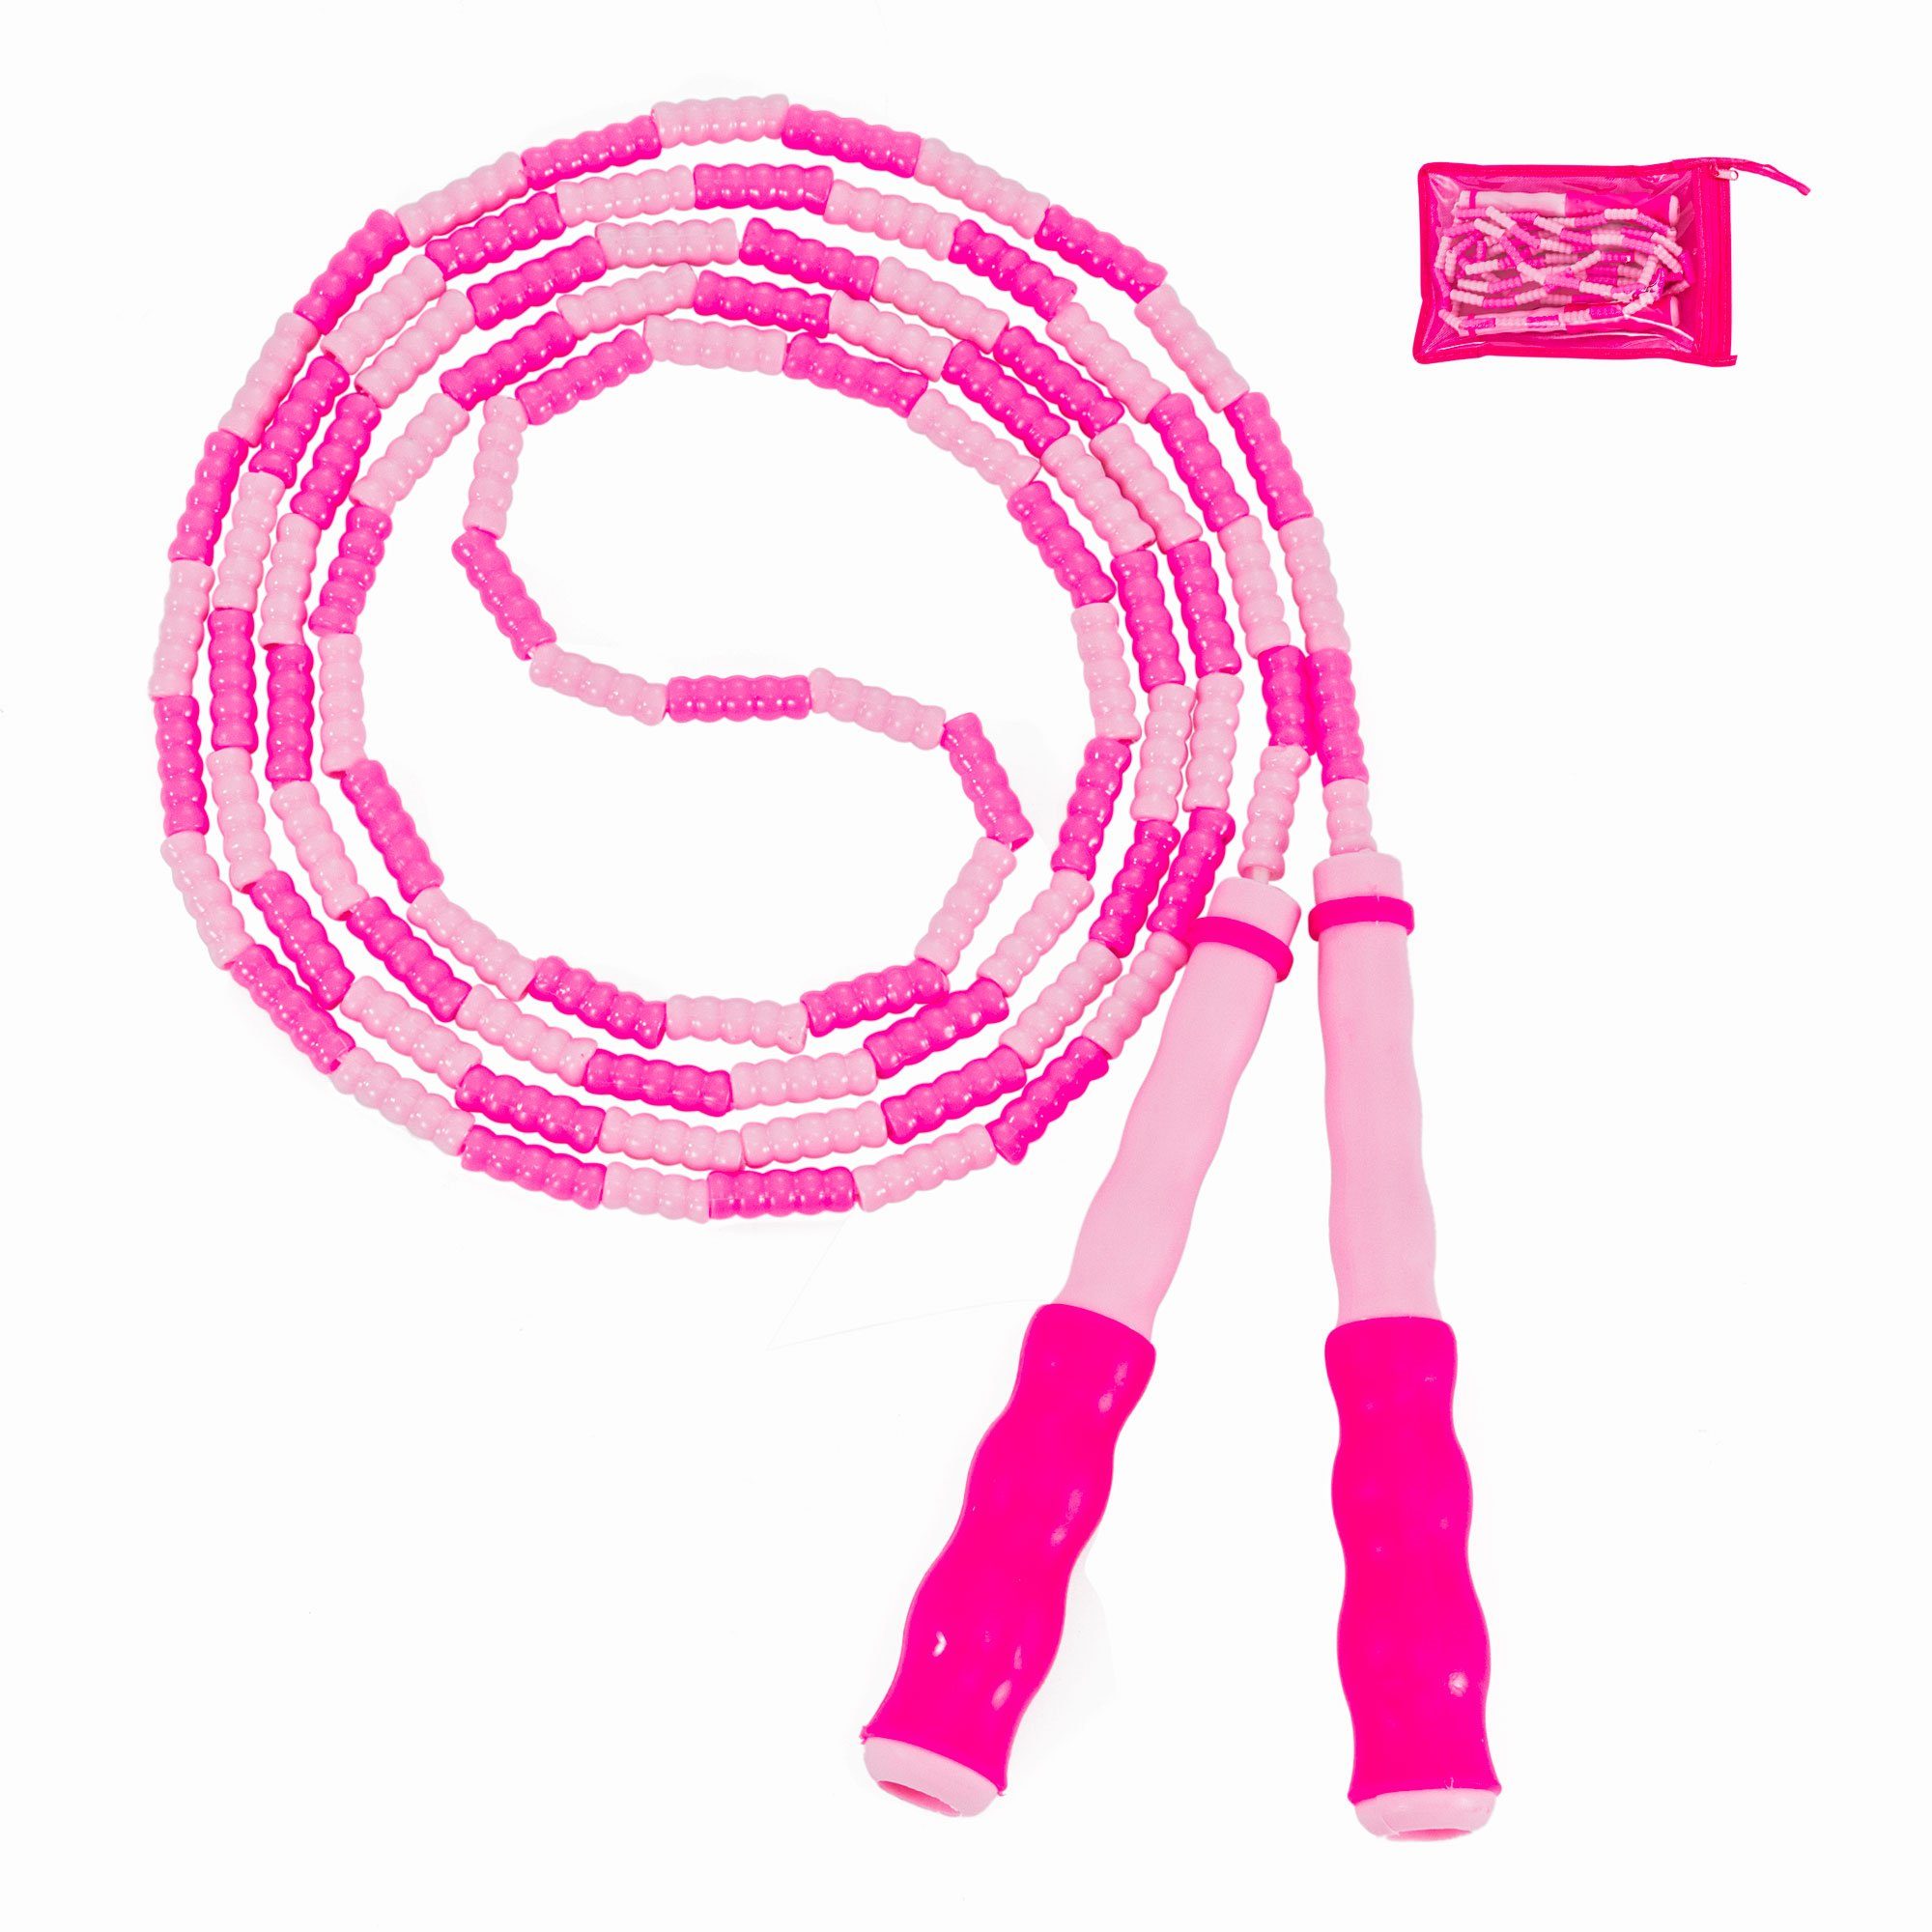 Penelife Springseil Jump Länge und für rosa Seillänge verstellbares Rope Erwachsene Springseil, verstellbar - 280 Kinder Beaded cm